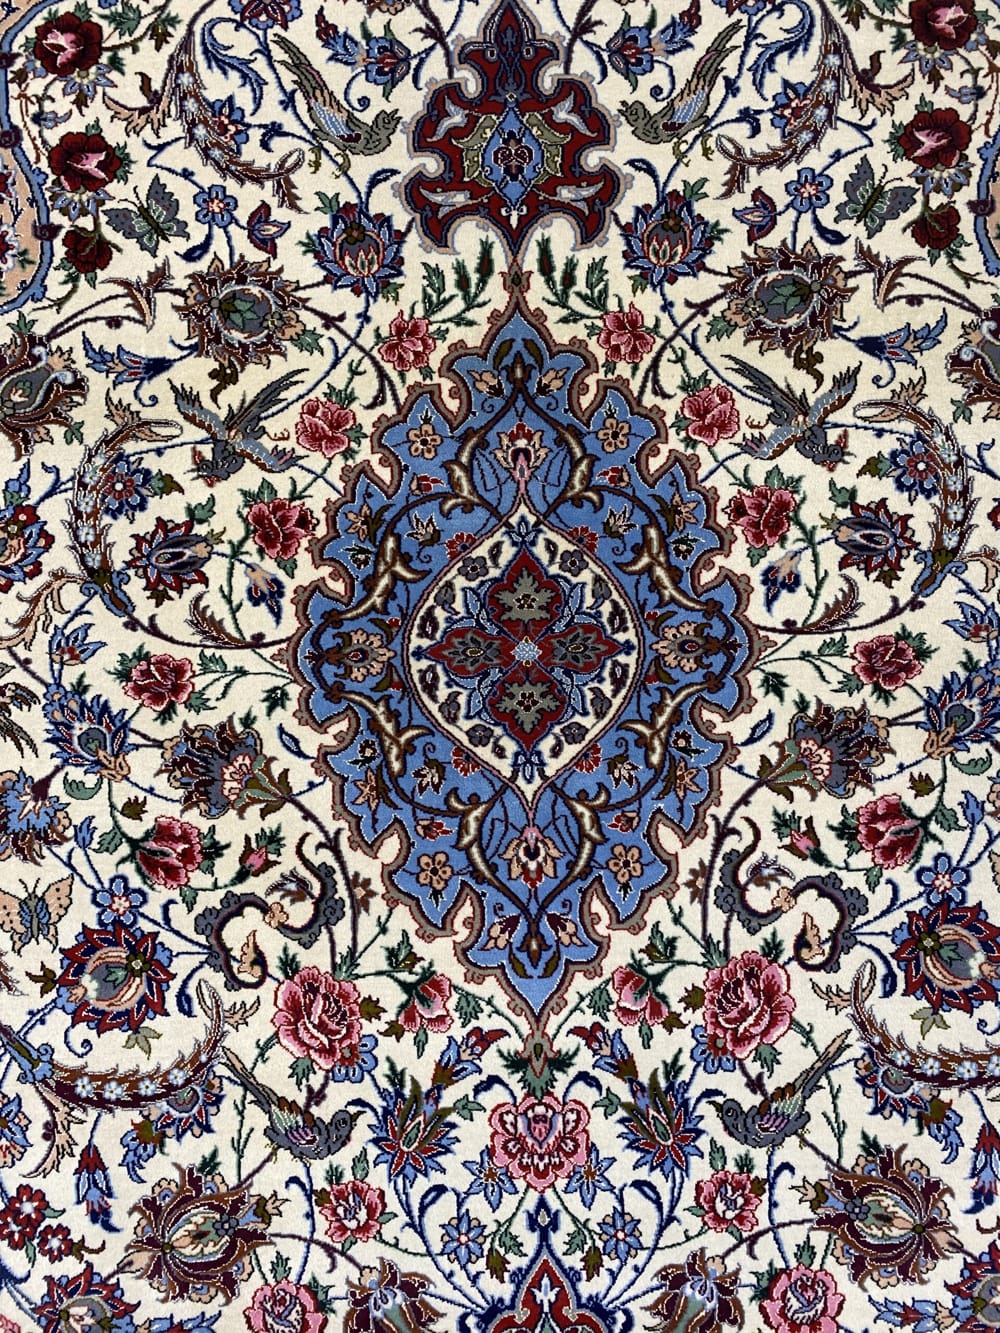 Rug# 10123, Isfehan, Kork-wool & silk pile on a full silk foundation, 900k KPSQM, Signed, circa 1980, Persia, size 192x130 cm (7)